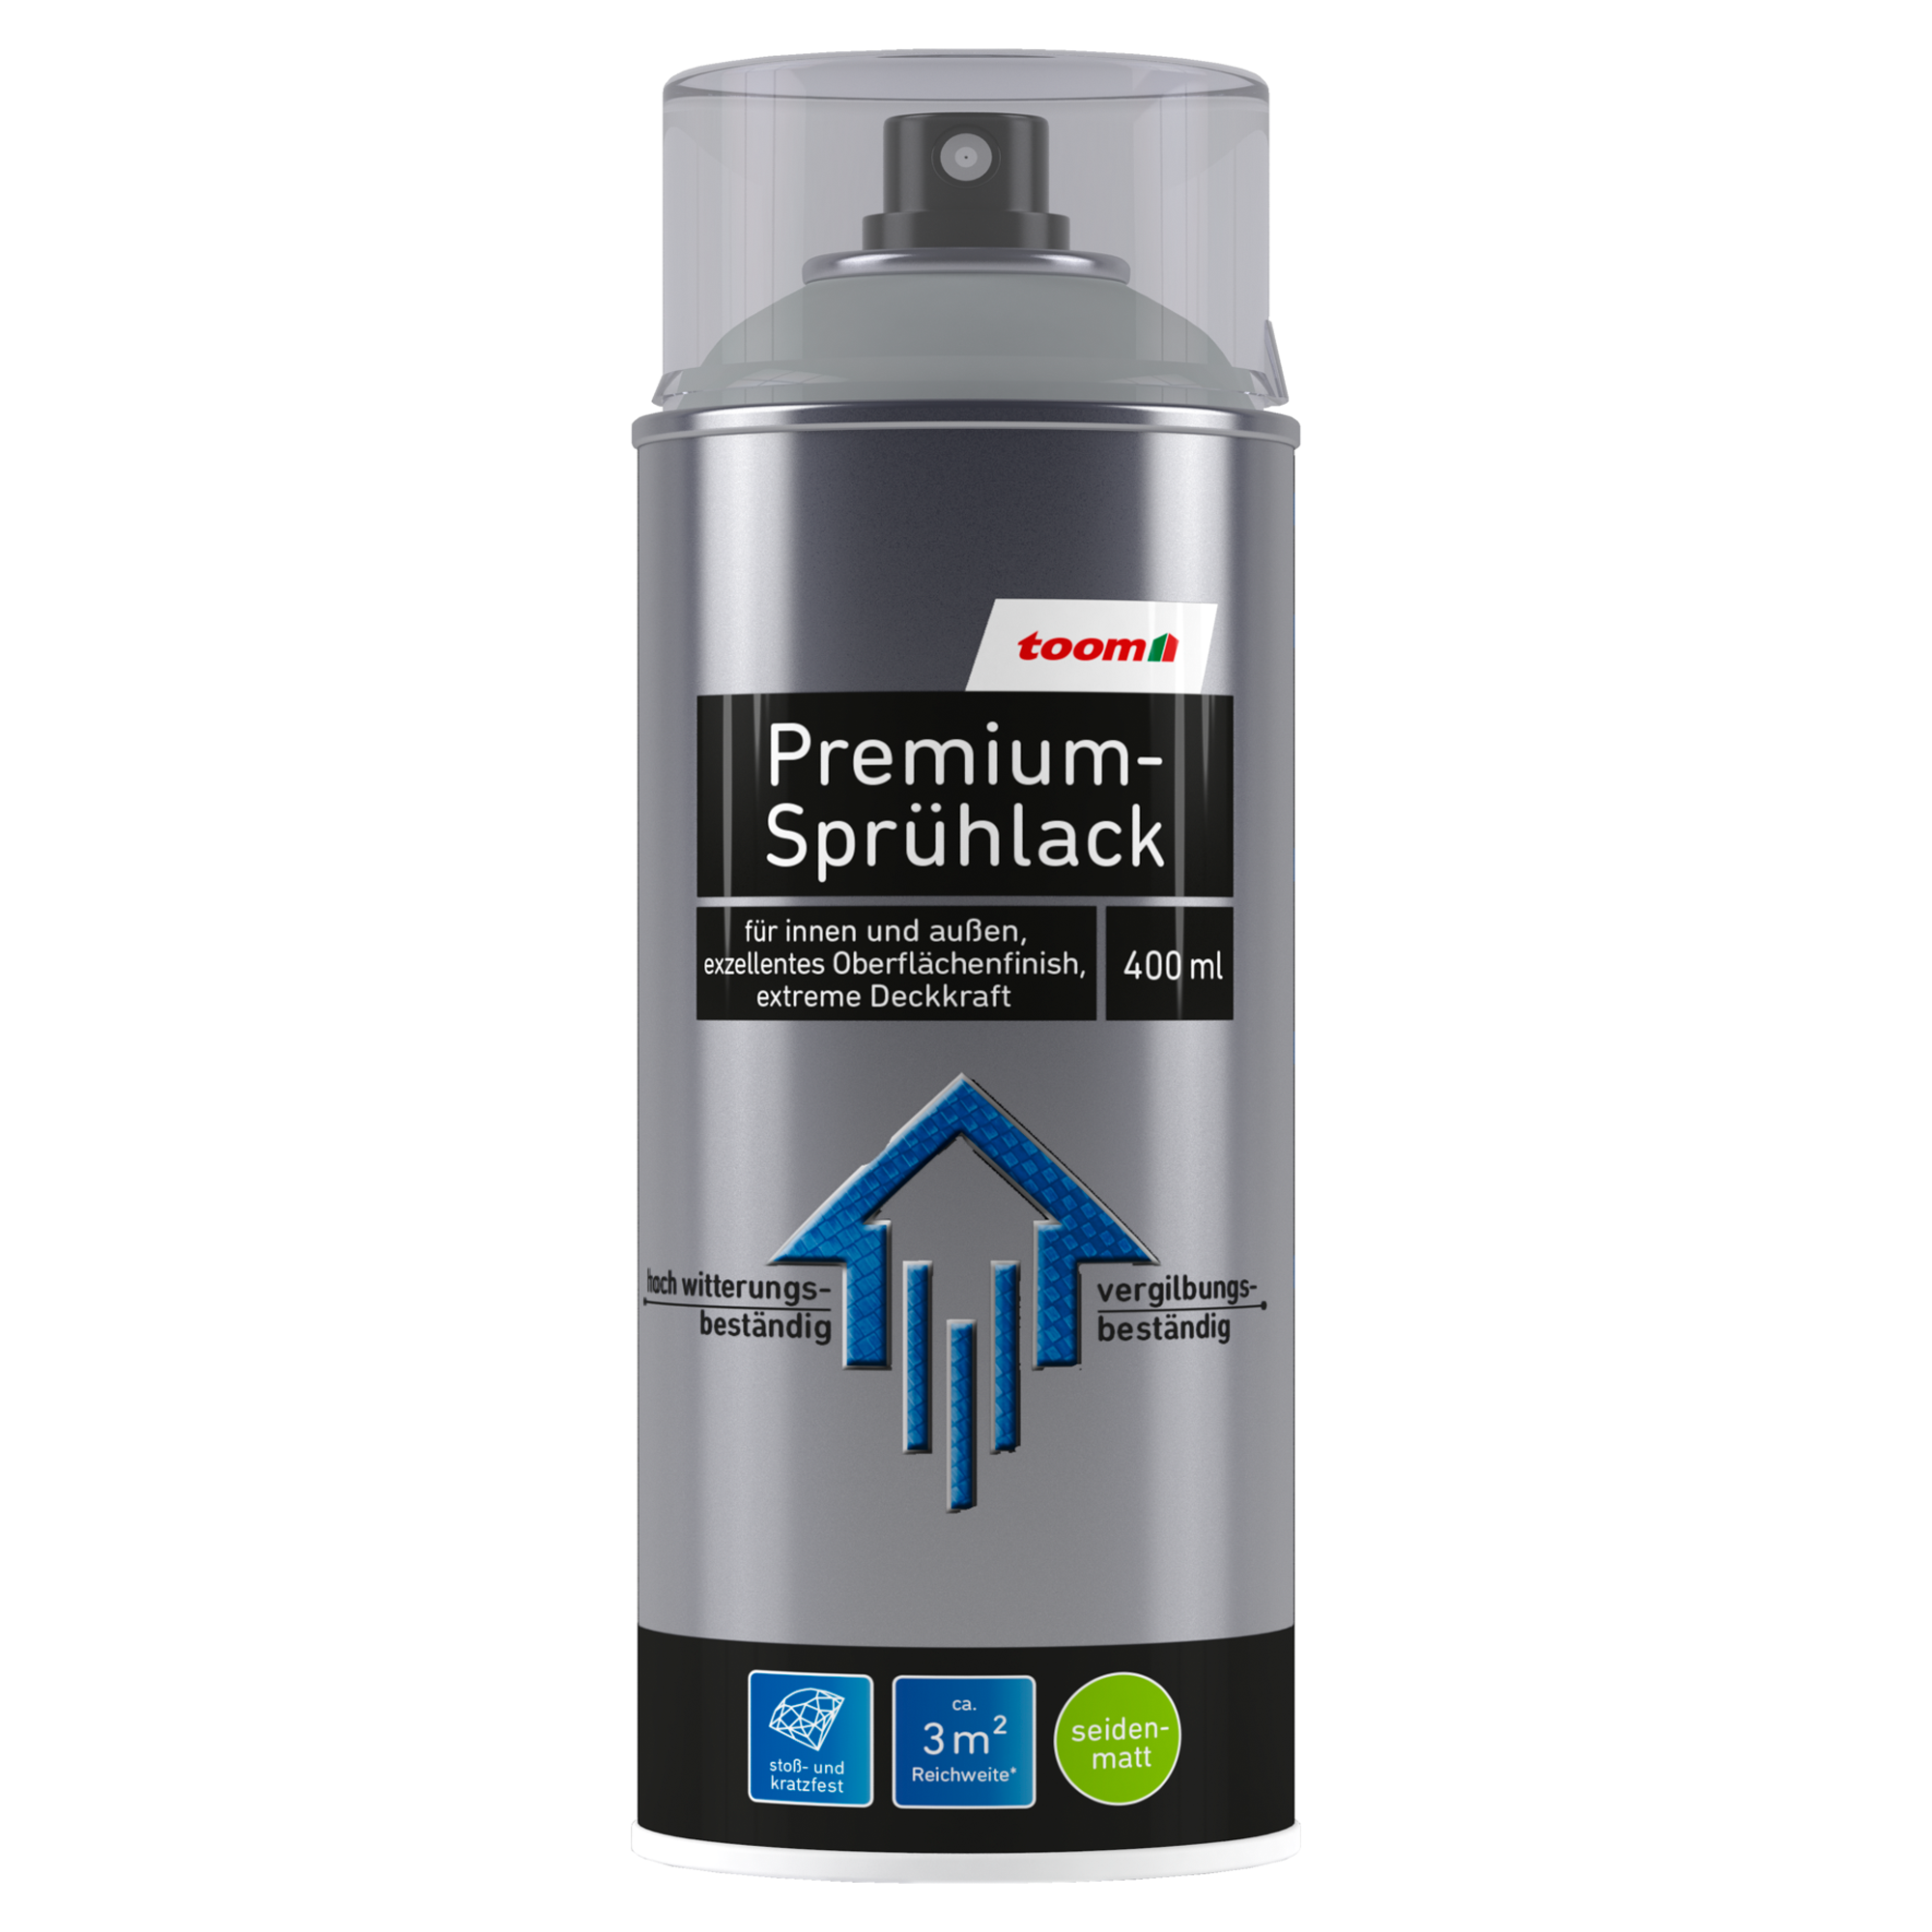 Premium-Sprühlack grau seidenmatt 400 ml + product picture